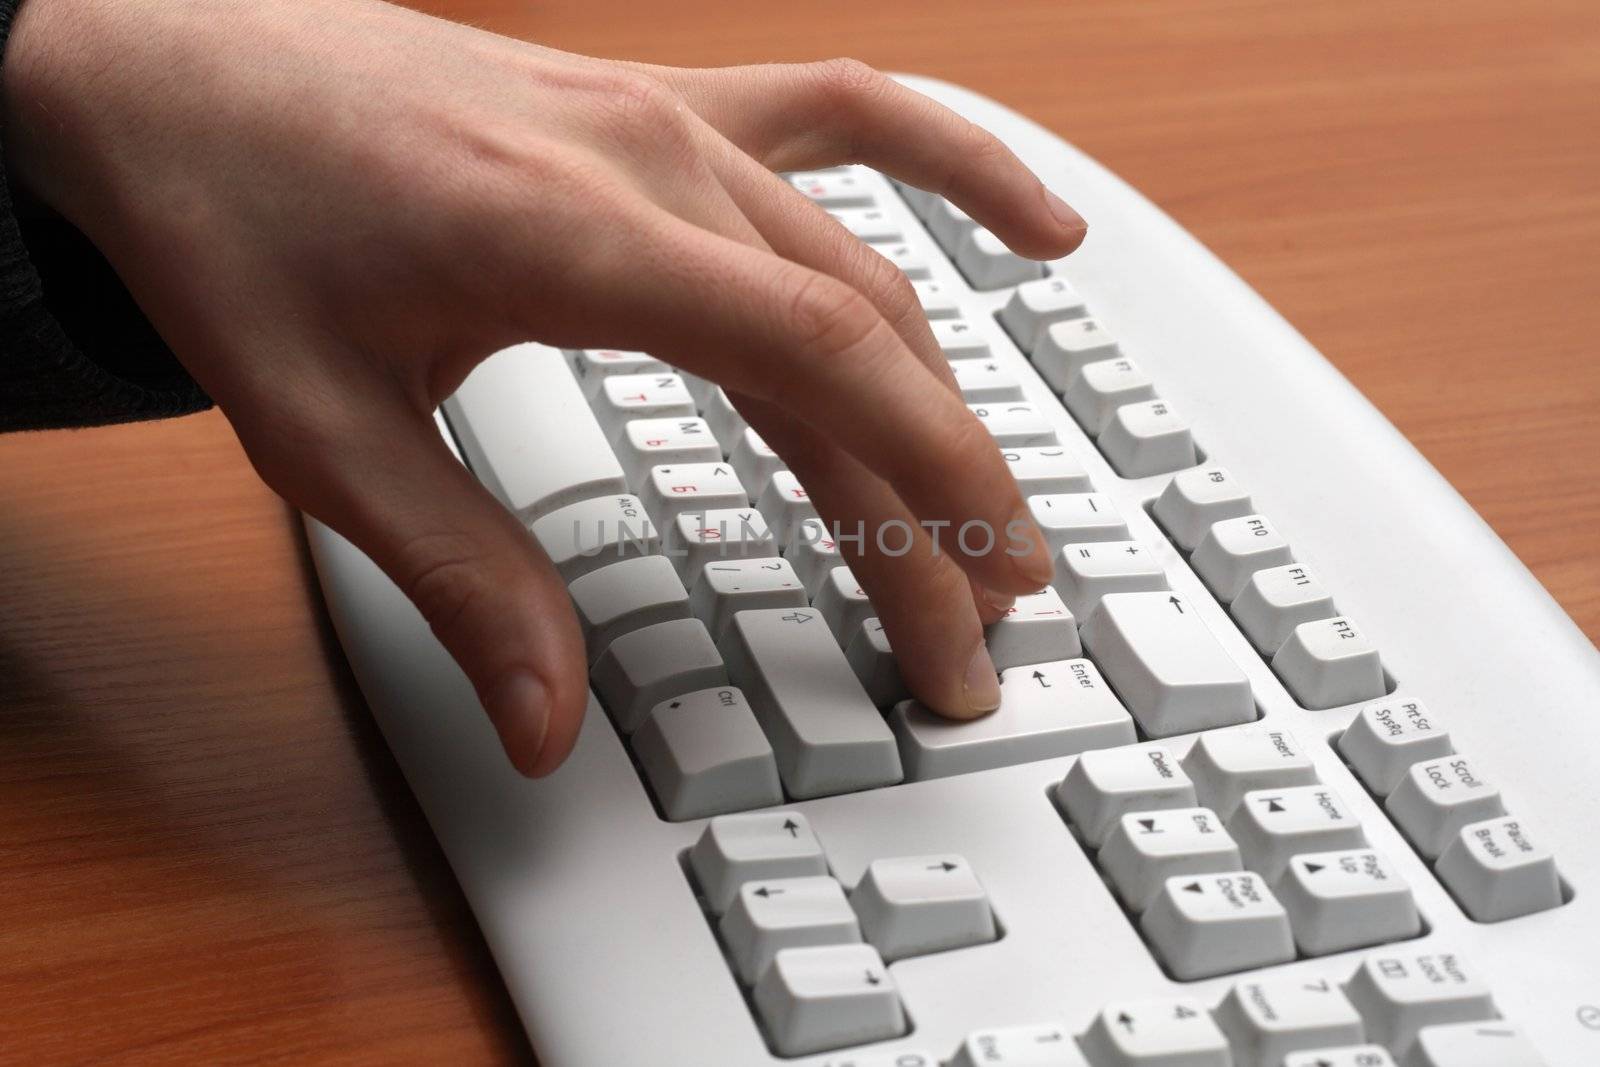 Finger pushing the enter key on keyboard